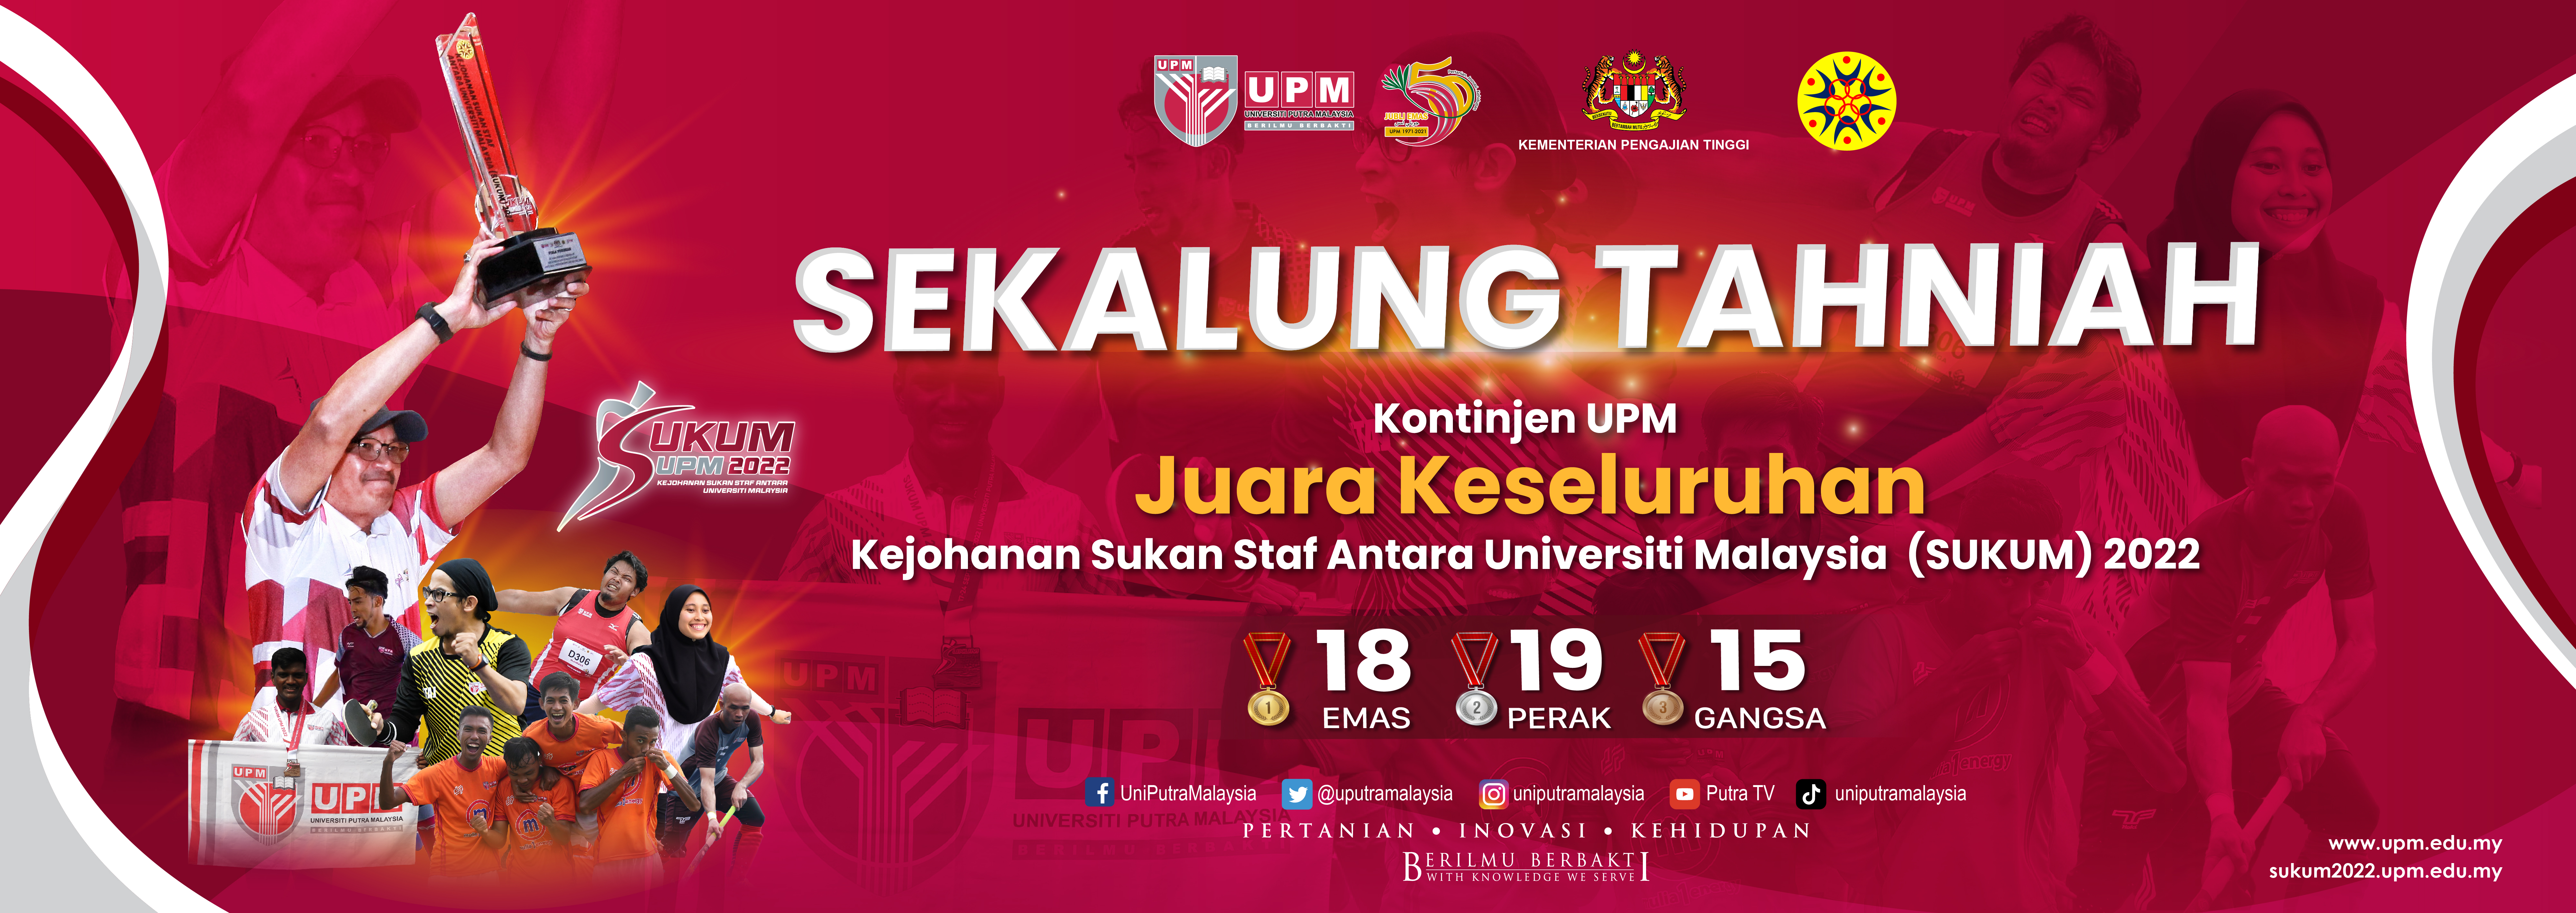 UPM Tuan Rumah Kejohanan Sukan Staf Universiti Malaysia (SUKUM)